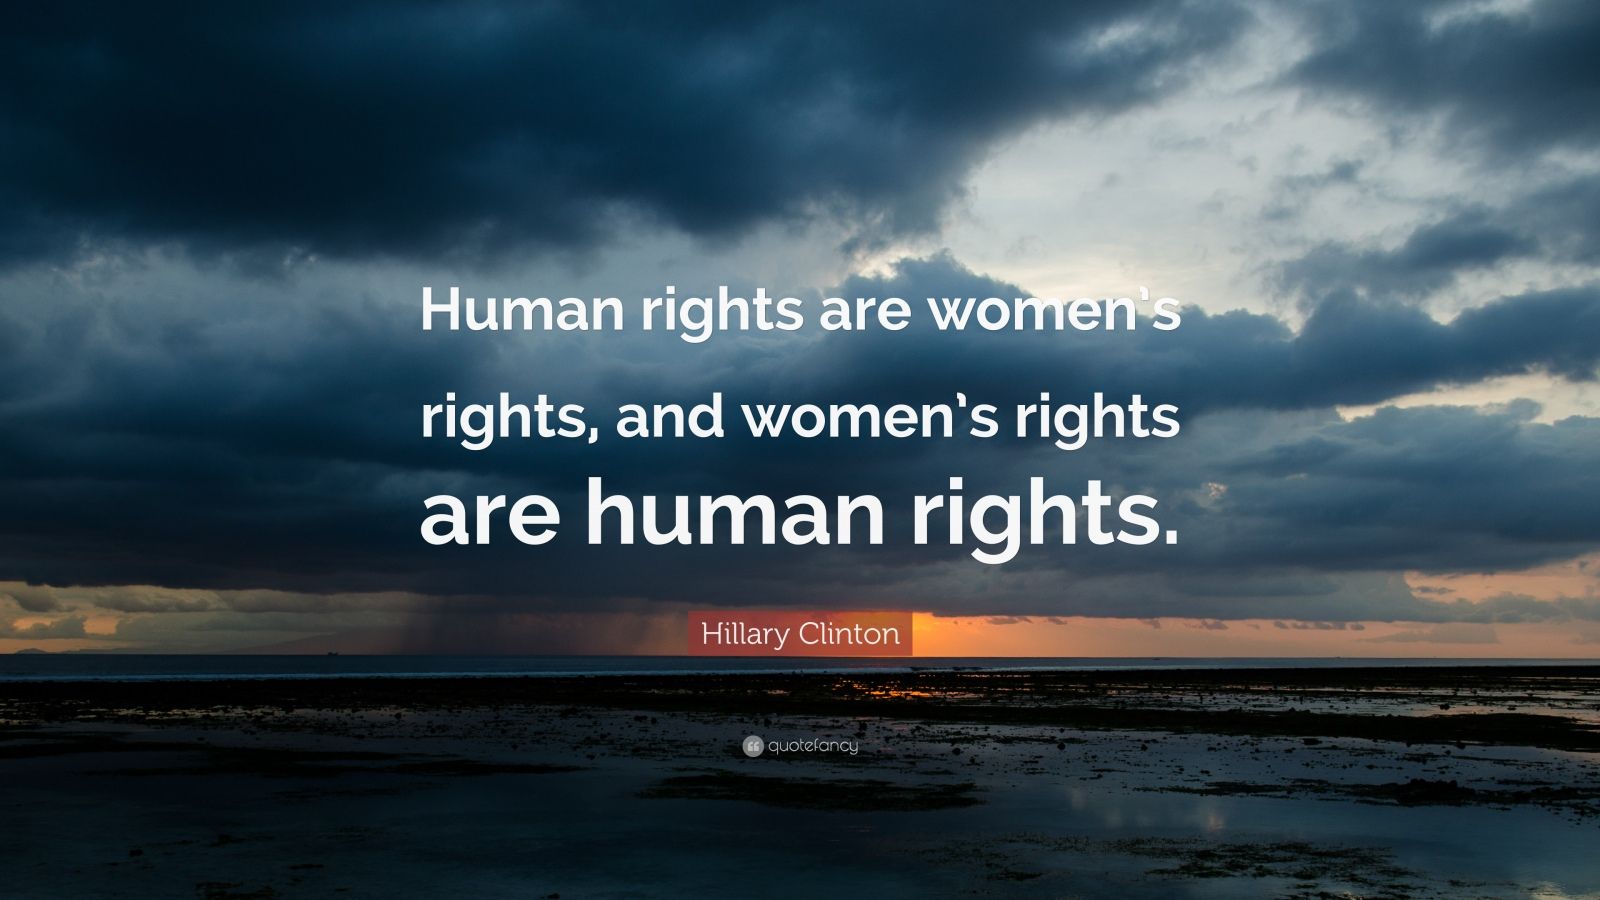 370535 Women Rights Images Stock Photos  Vectors  Shutterstock